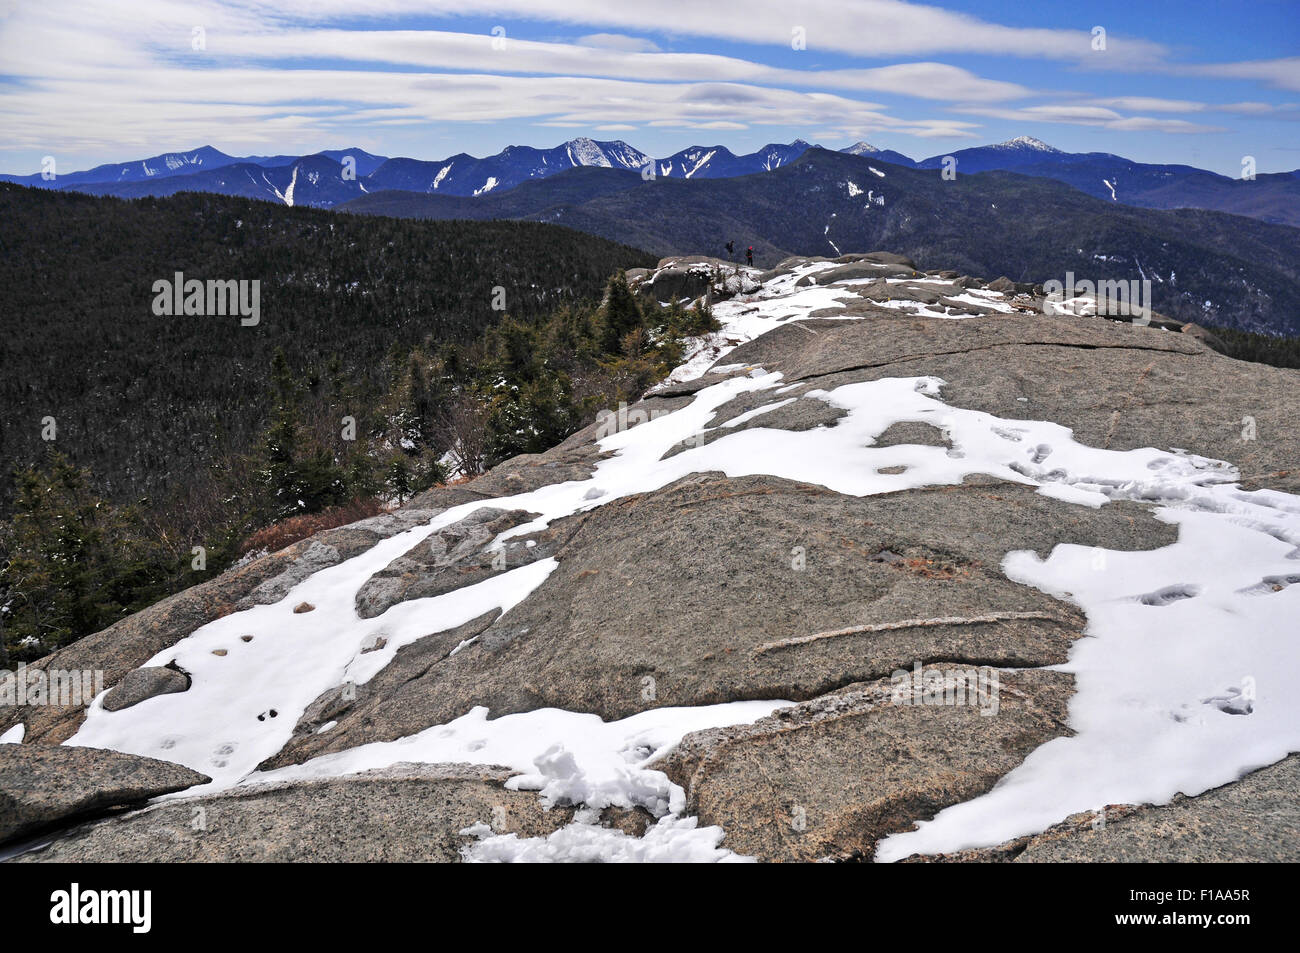 Alpine mountain landscape with snow, Adirondacks, New York State Stock Photo